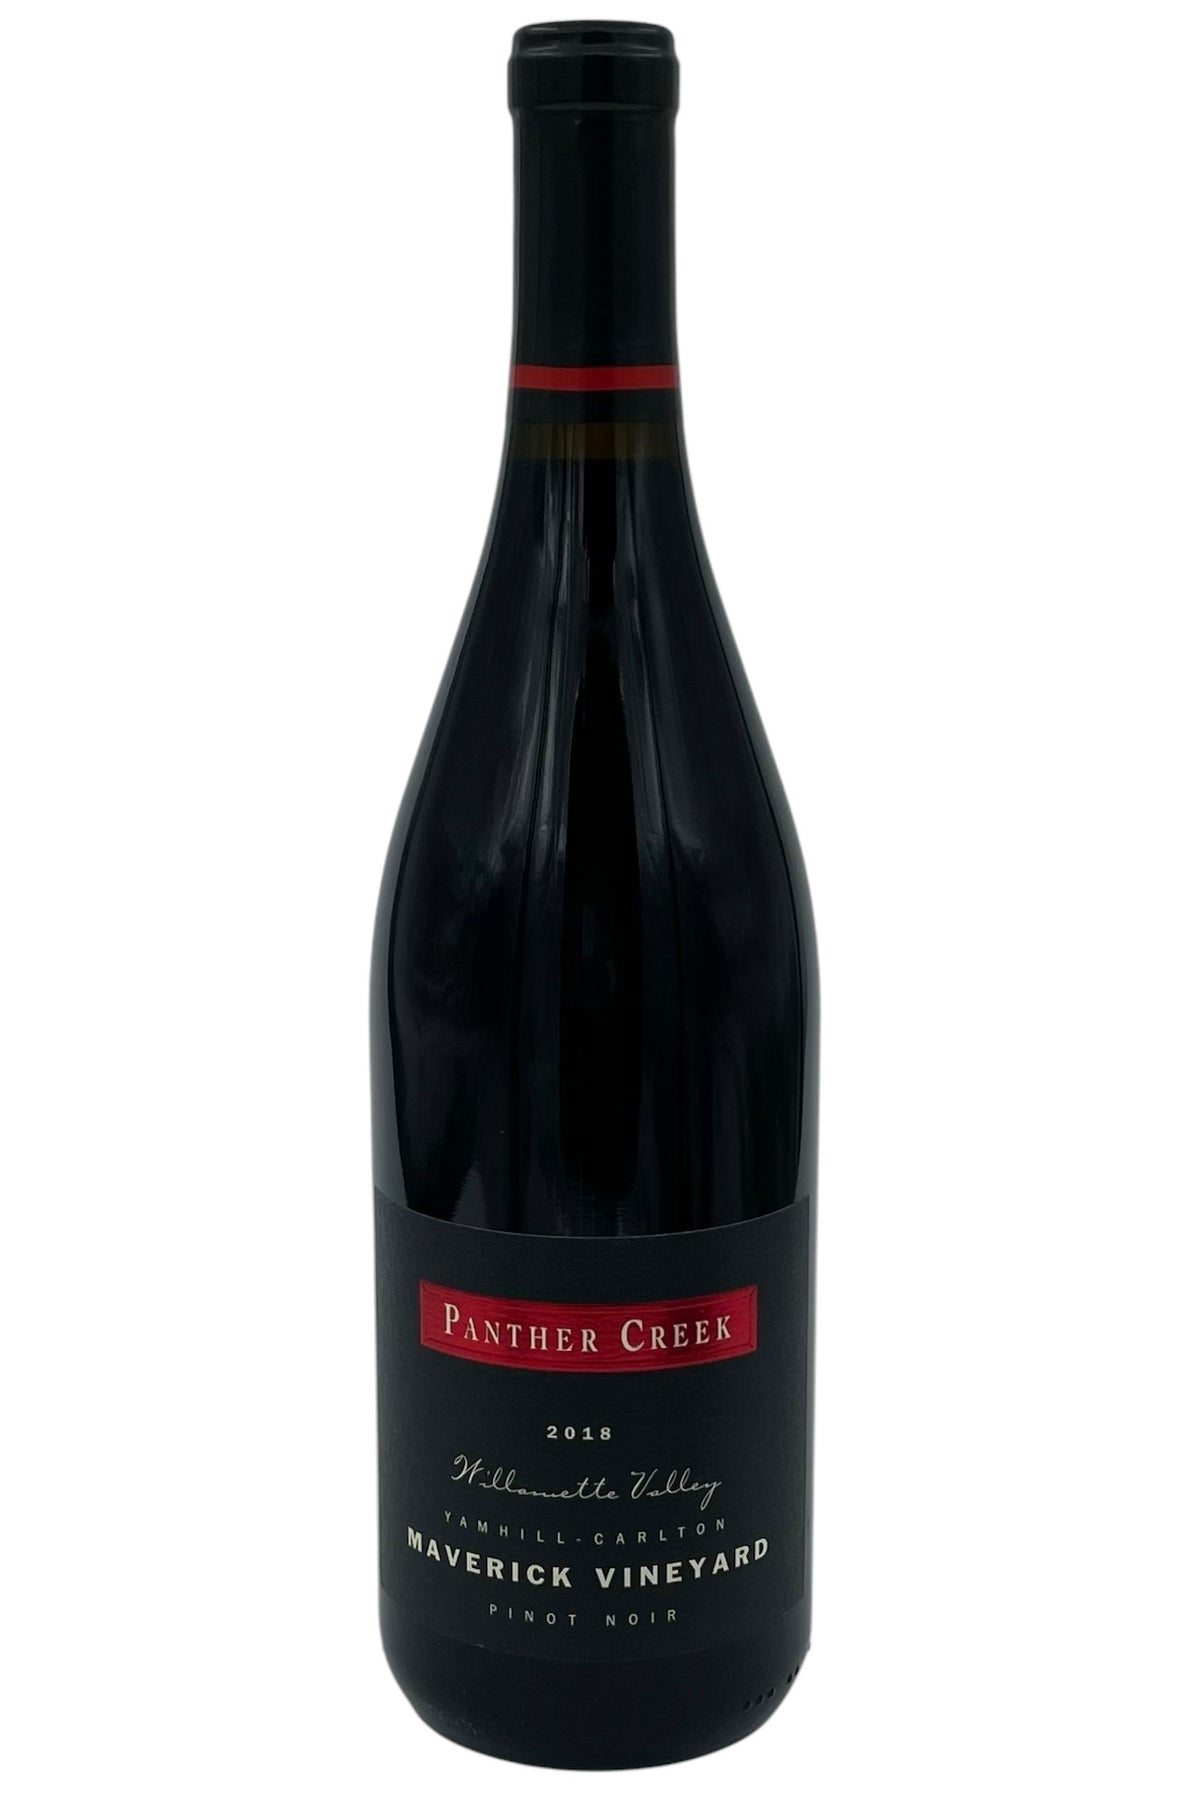 Panther Creek 2018 Pinot Noir Maverick Vineyard Yamhill-Carlton